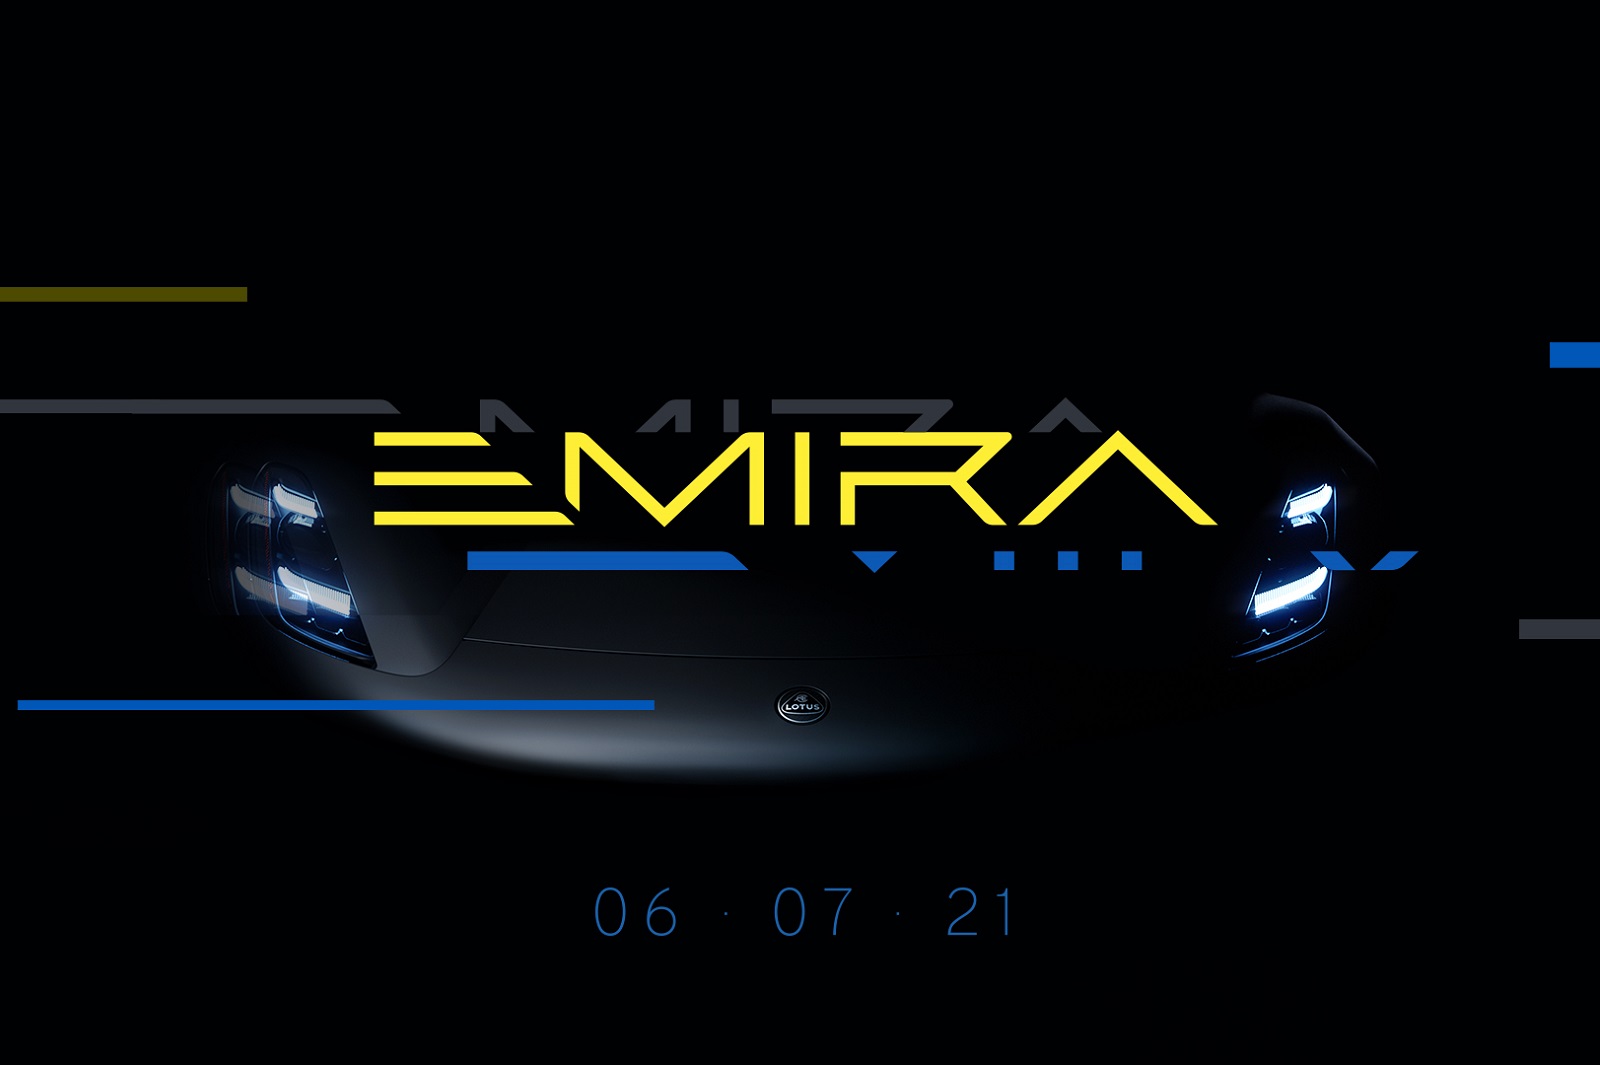 Emira-Launch-Date (1)